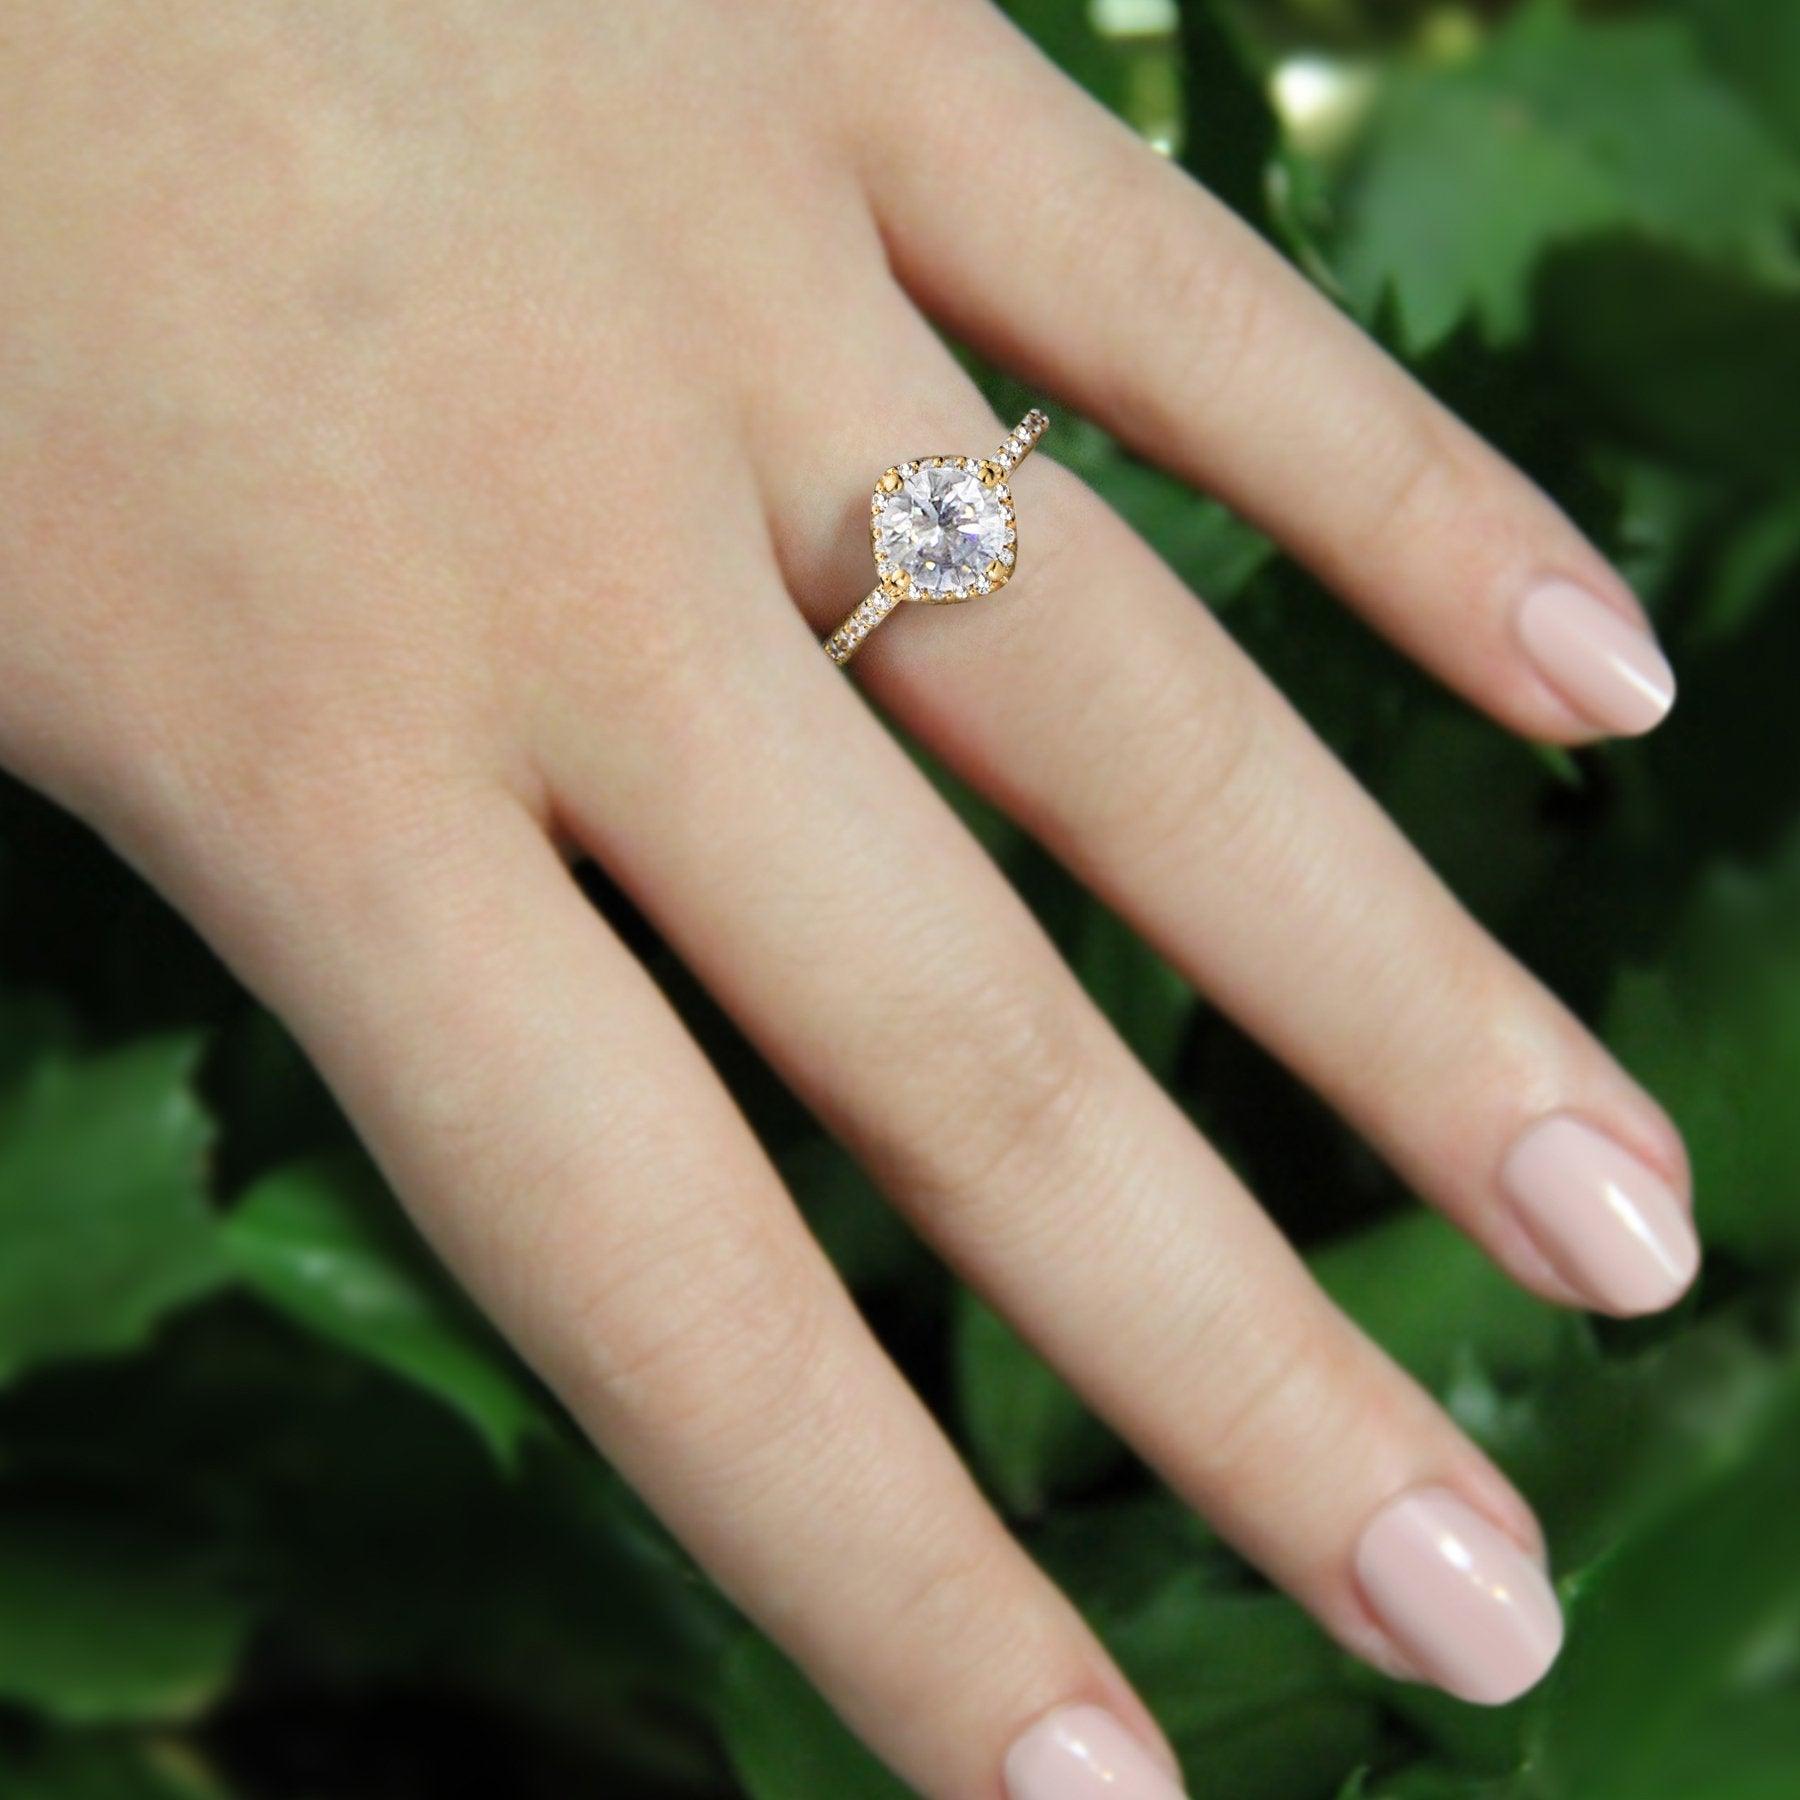 BW JAMES Engagement Rings " The Verona" Halo Semi-Mount Diamond Ring